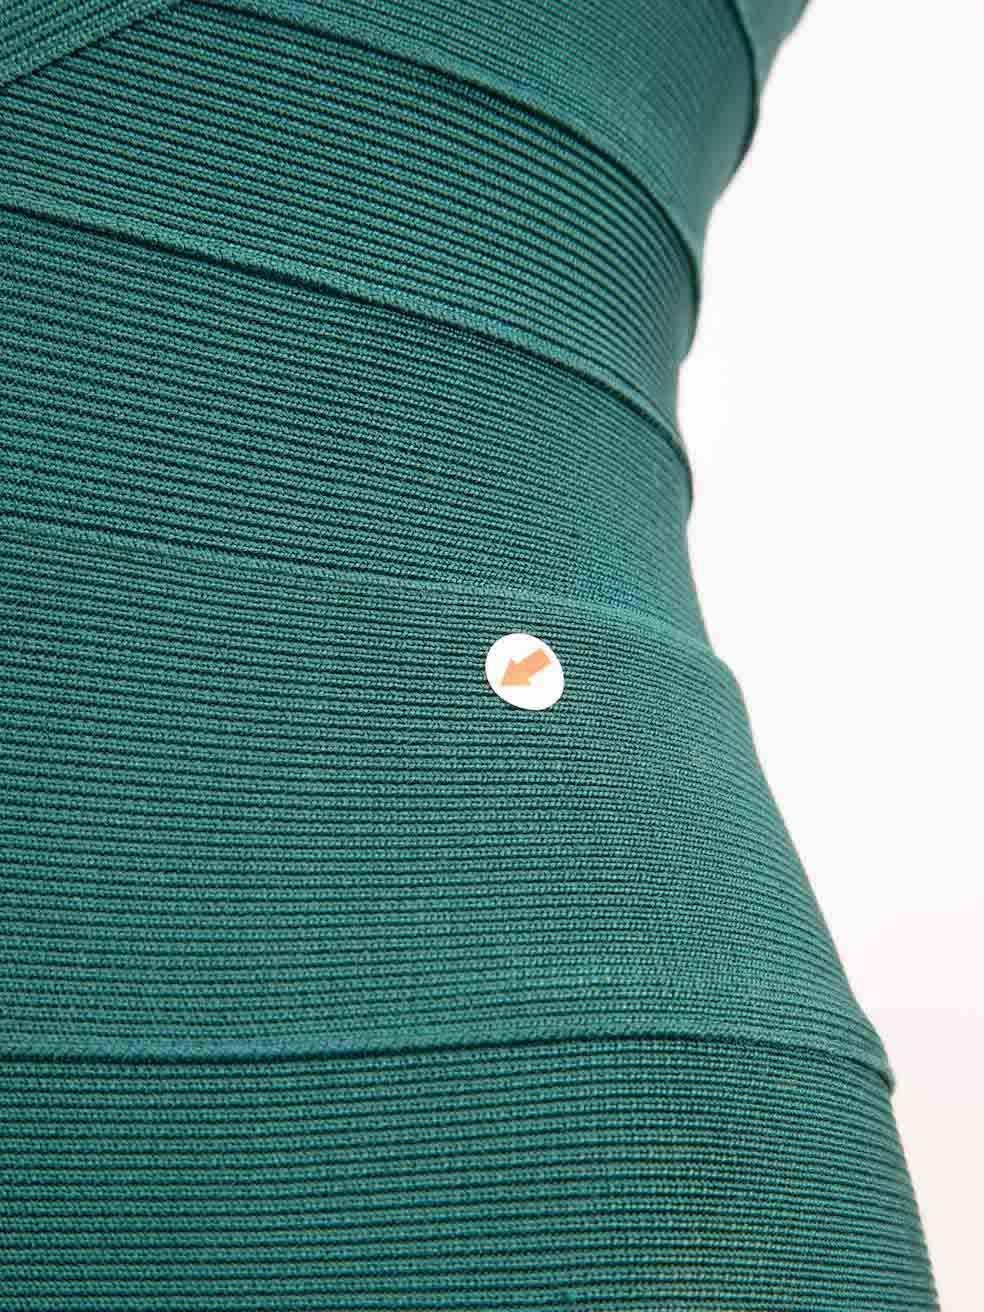 Herve Leger Green One-Shoulder Bandage Mini Dress Size XS For Sale 2